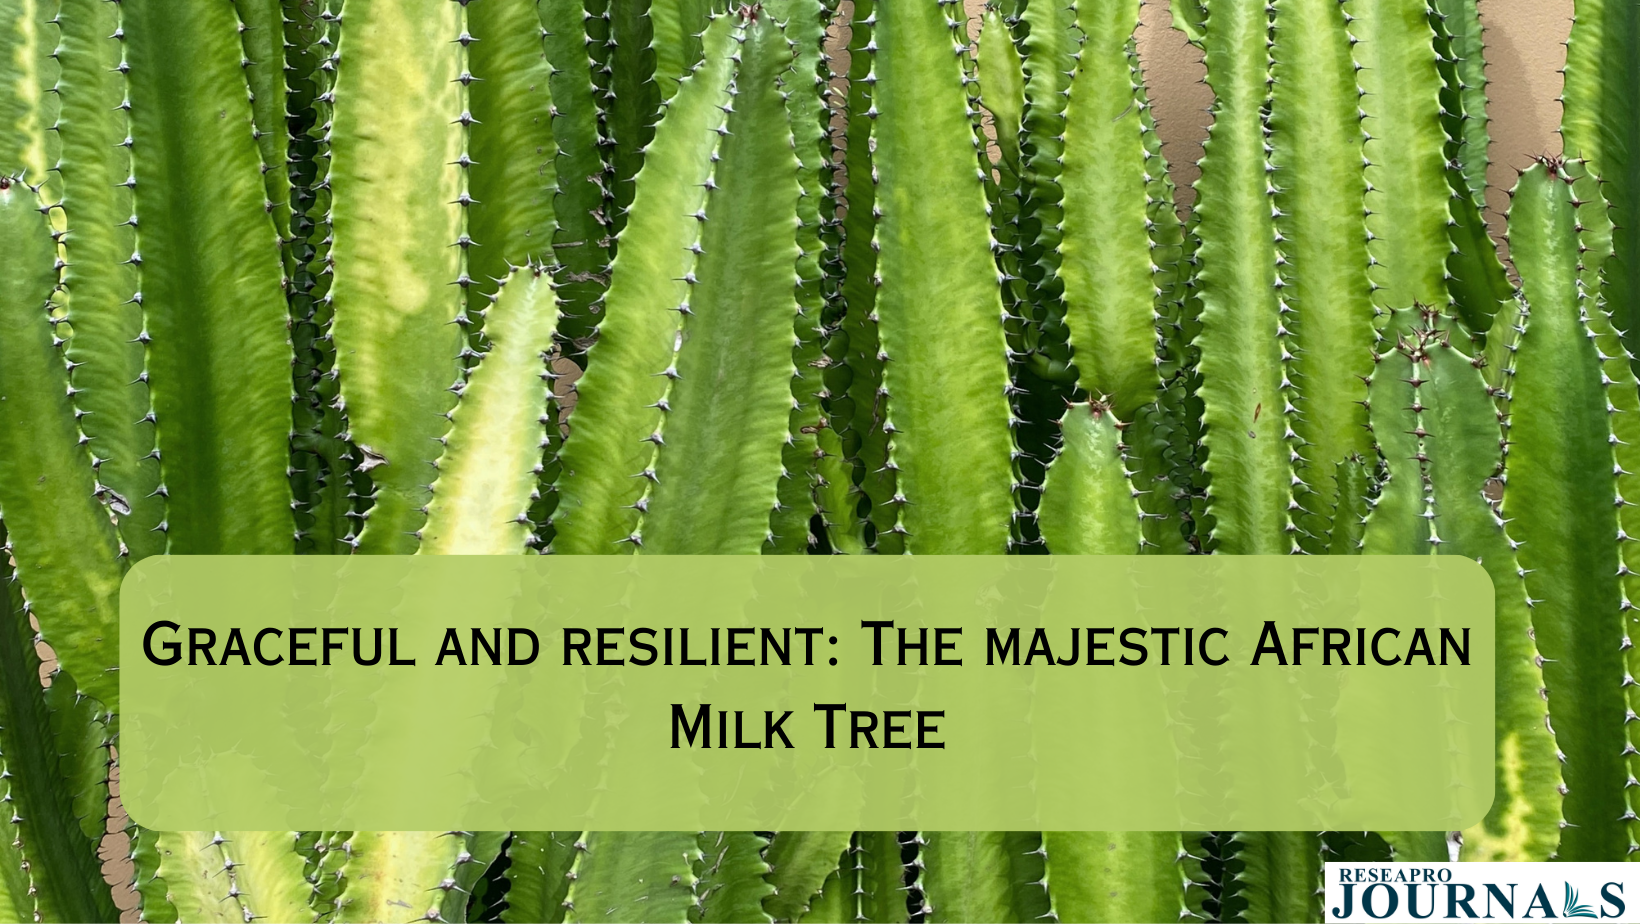 The Majestic African Milk Tree